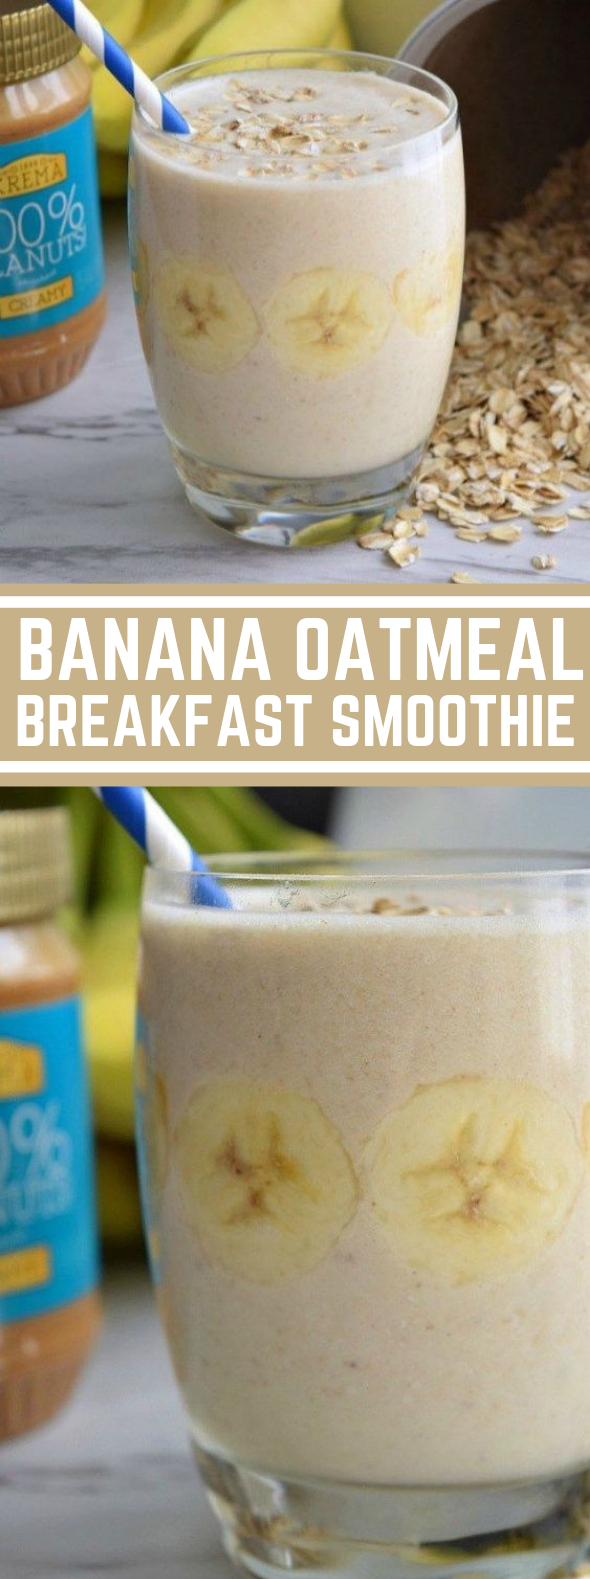 Banana Oatmeal Breakfast Smoothie #healthydrink #breakfast